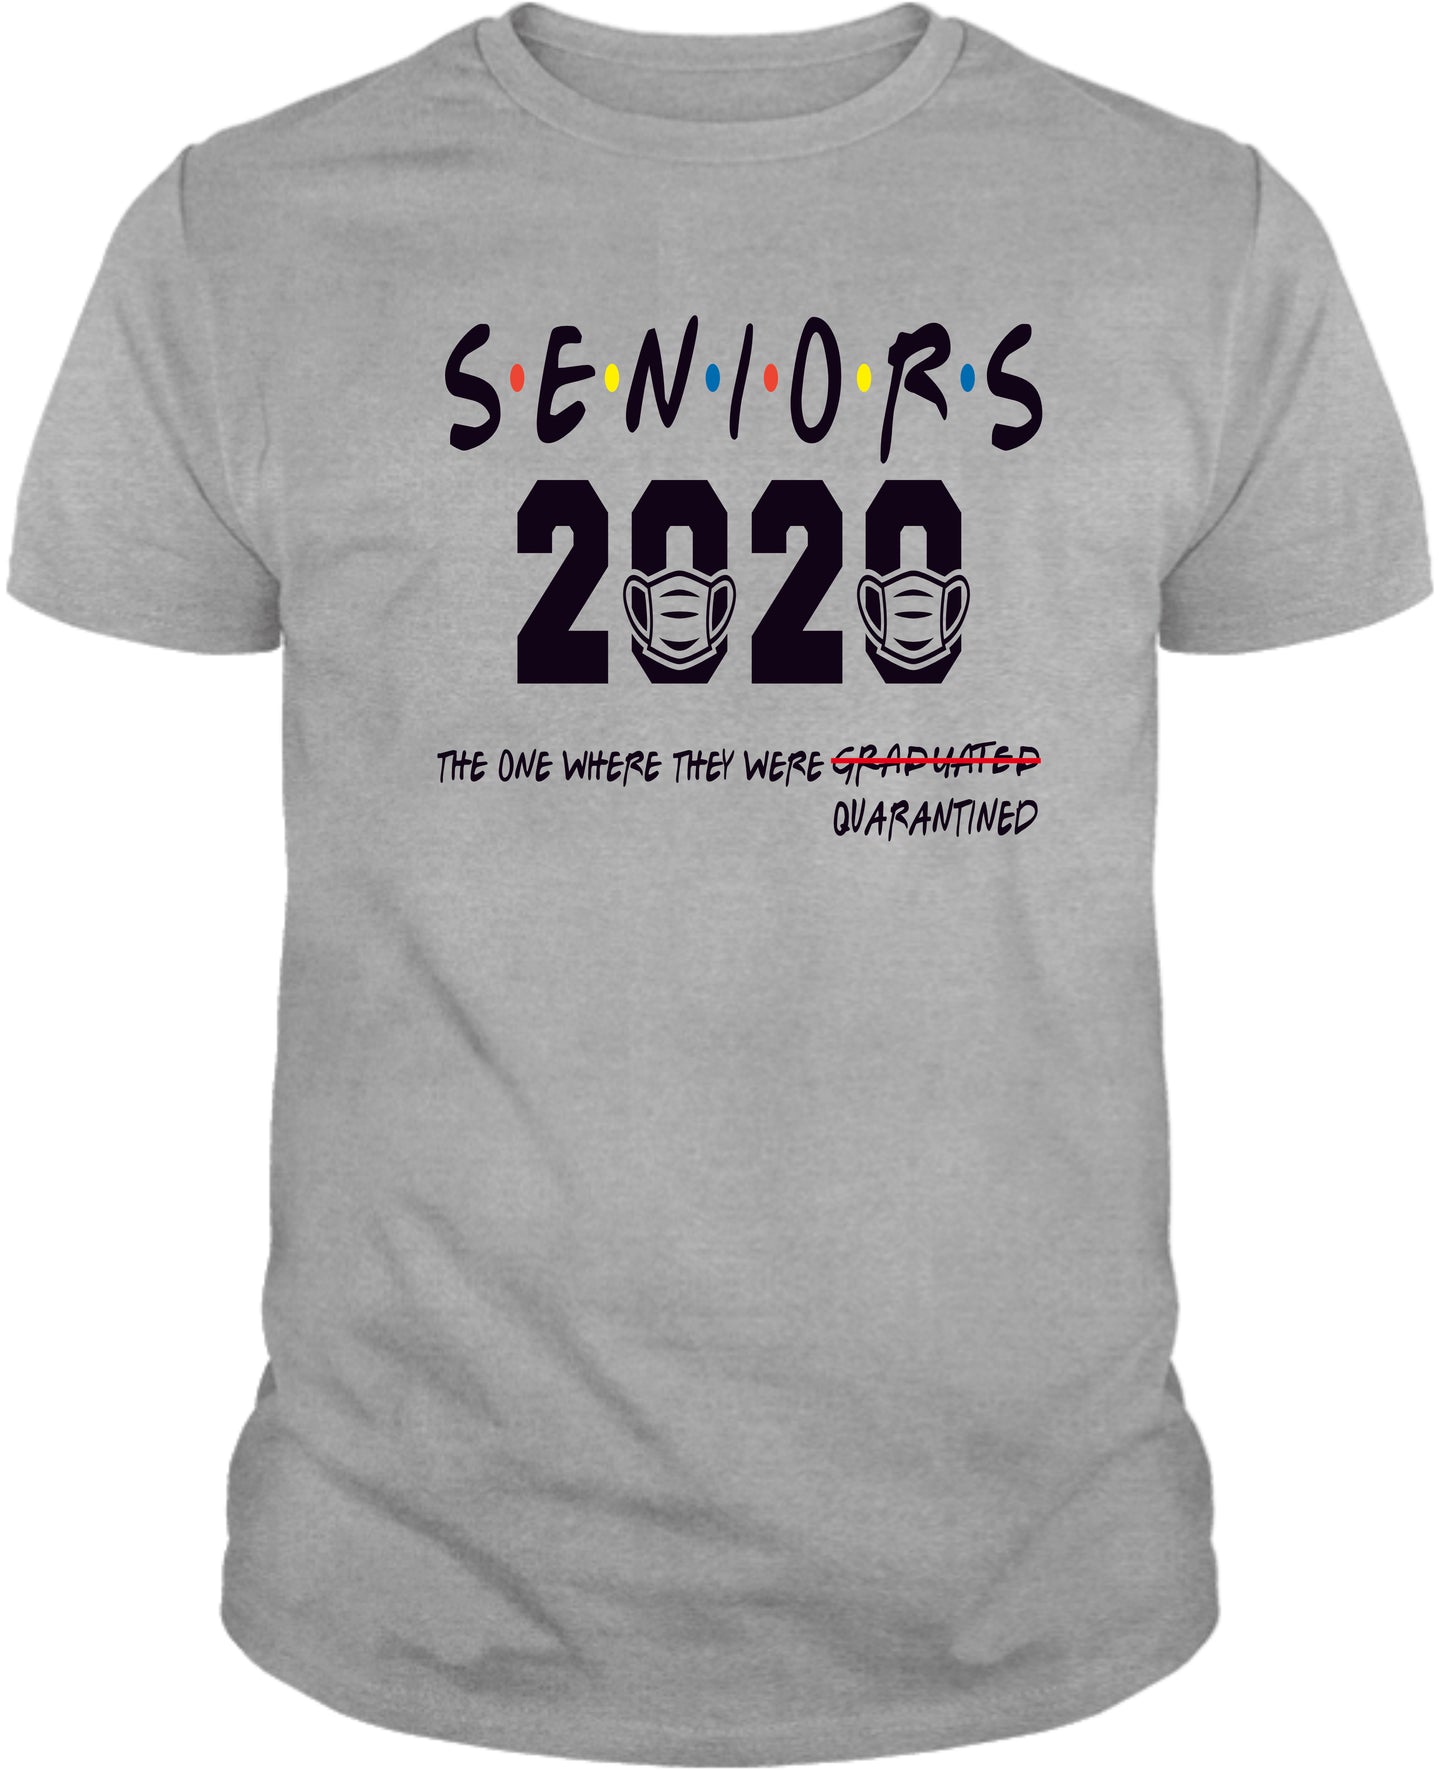 Seniors 2020 Graduated / Quarantined